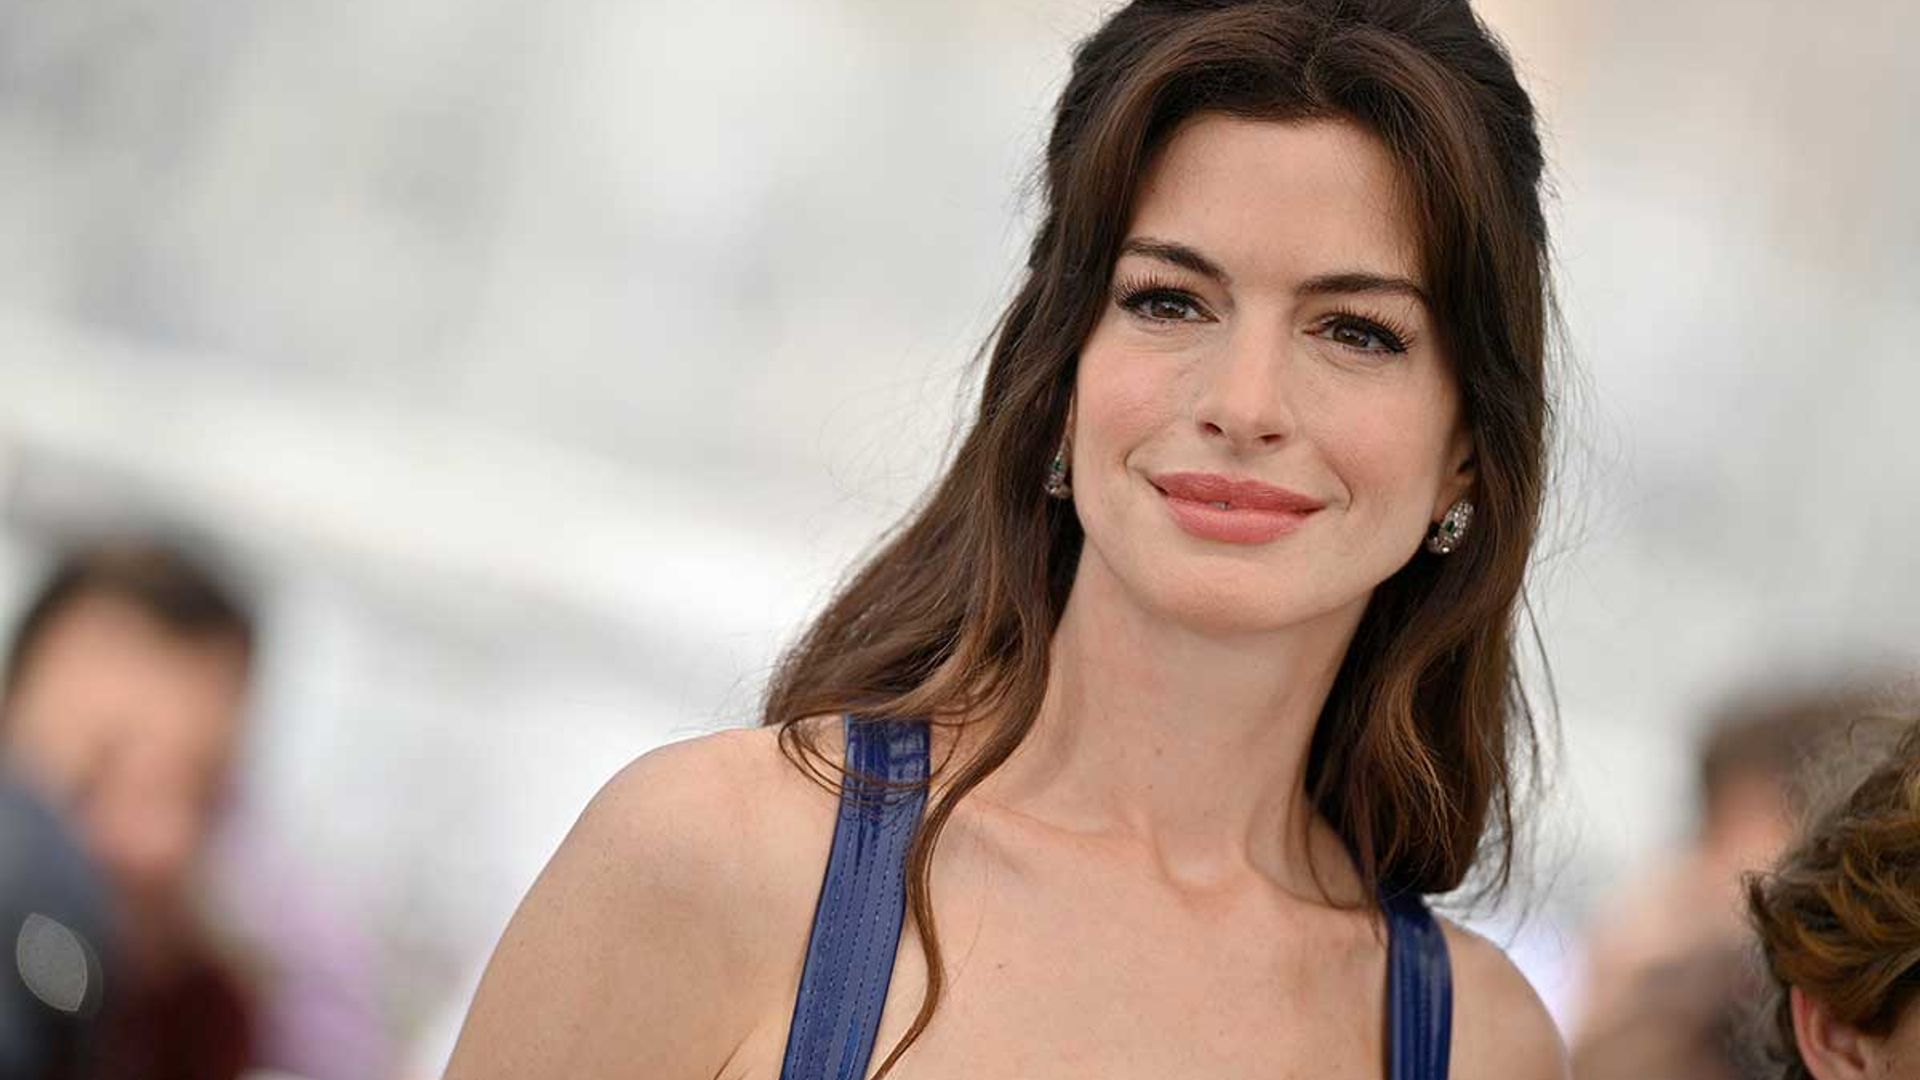 Anne Hathaway rocks sparkly PVC mini dress at Cannes Film Festival